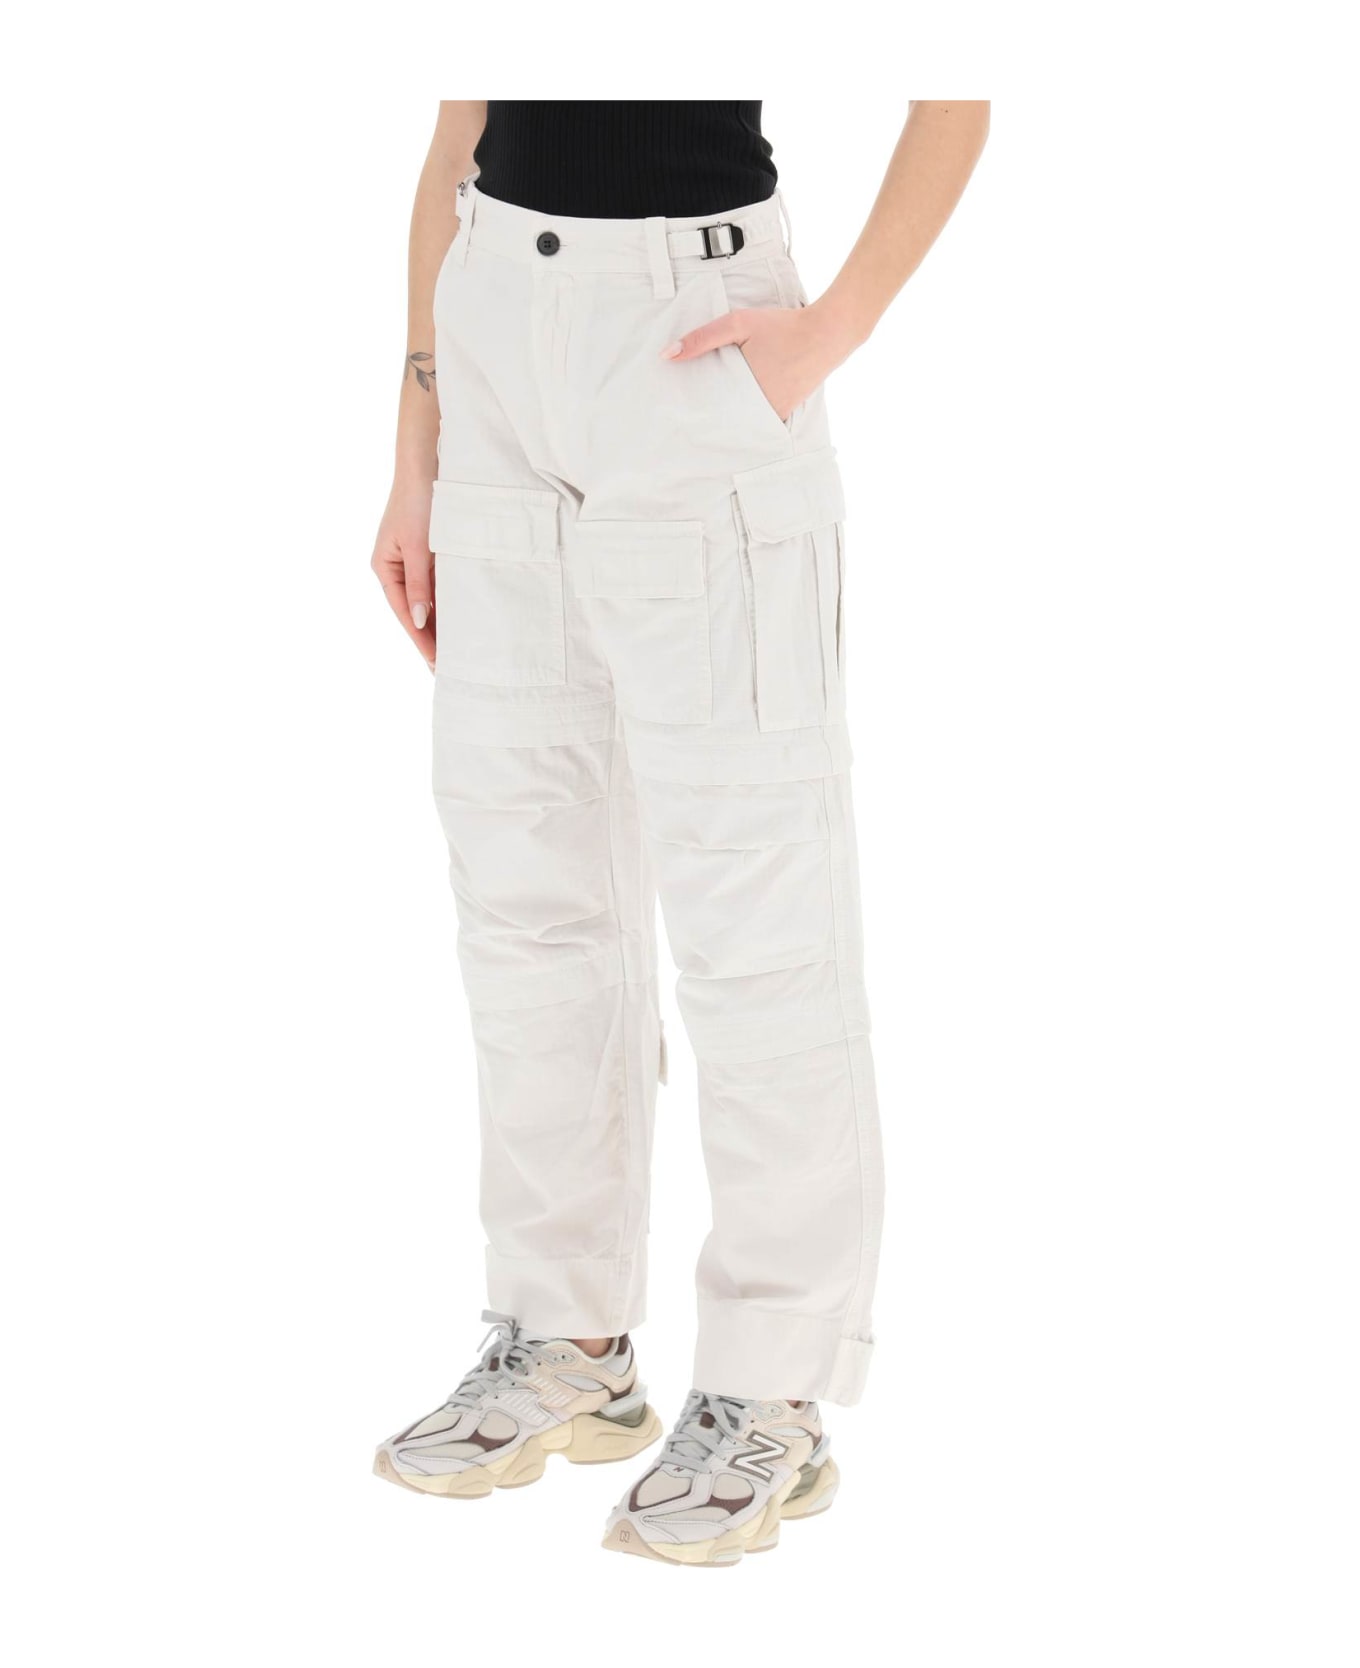 DARKPARK 'julia' Ripstop Cotton Cargo Pants - WHITE